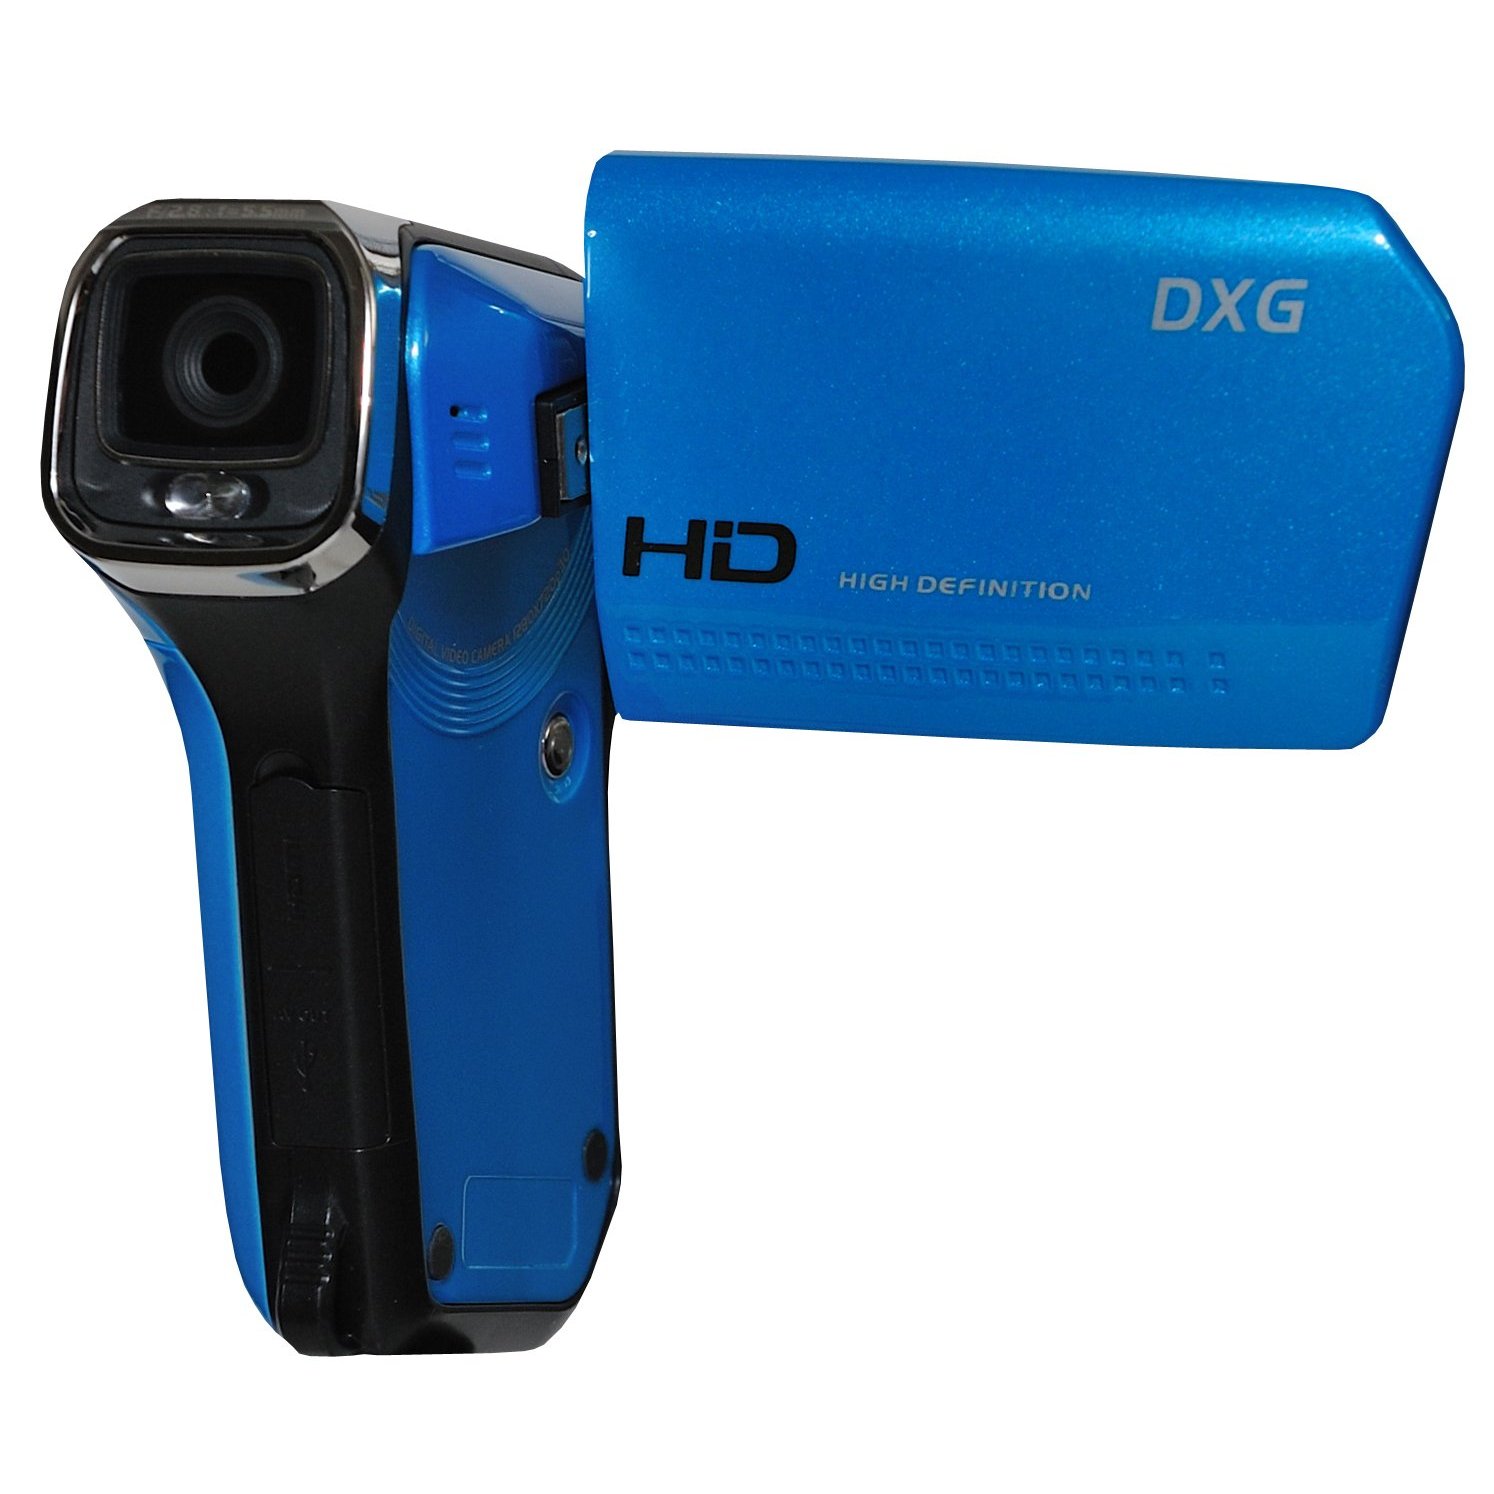 http://thetechjournal.com/wp-content/uploads/images/1110/1319508862-dxg-usa-dxg5b6vb-hd-dxg-quickshots-720p-hd-mini-camcorder-1.jpg